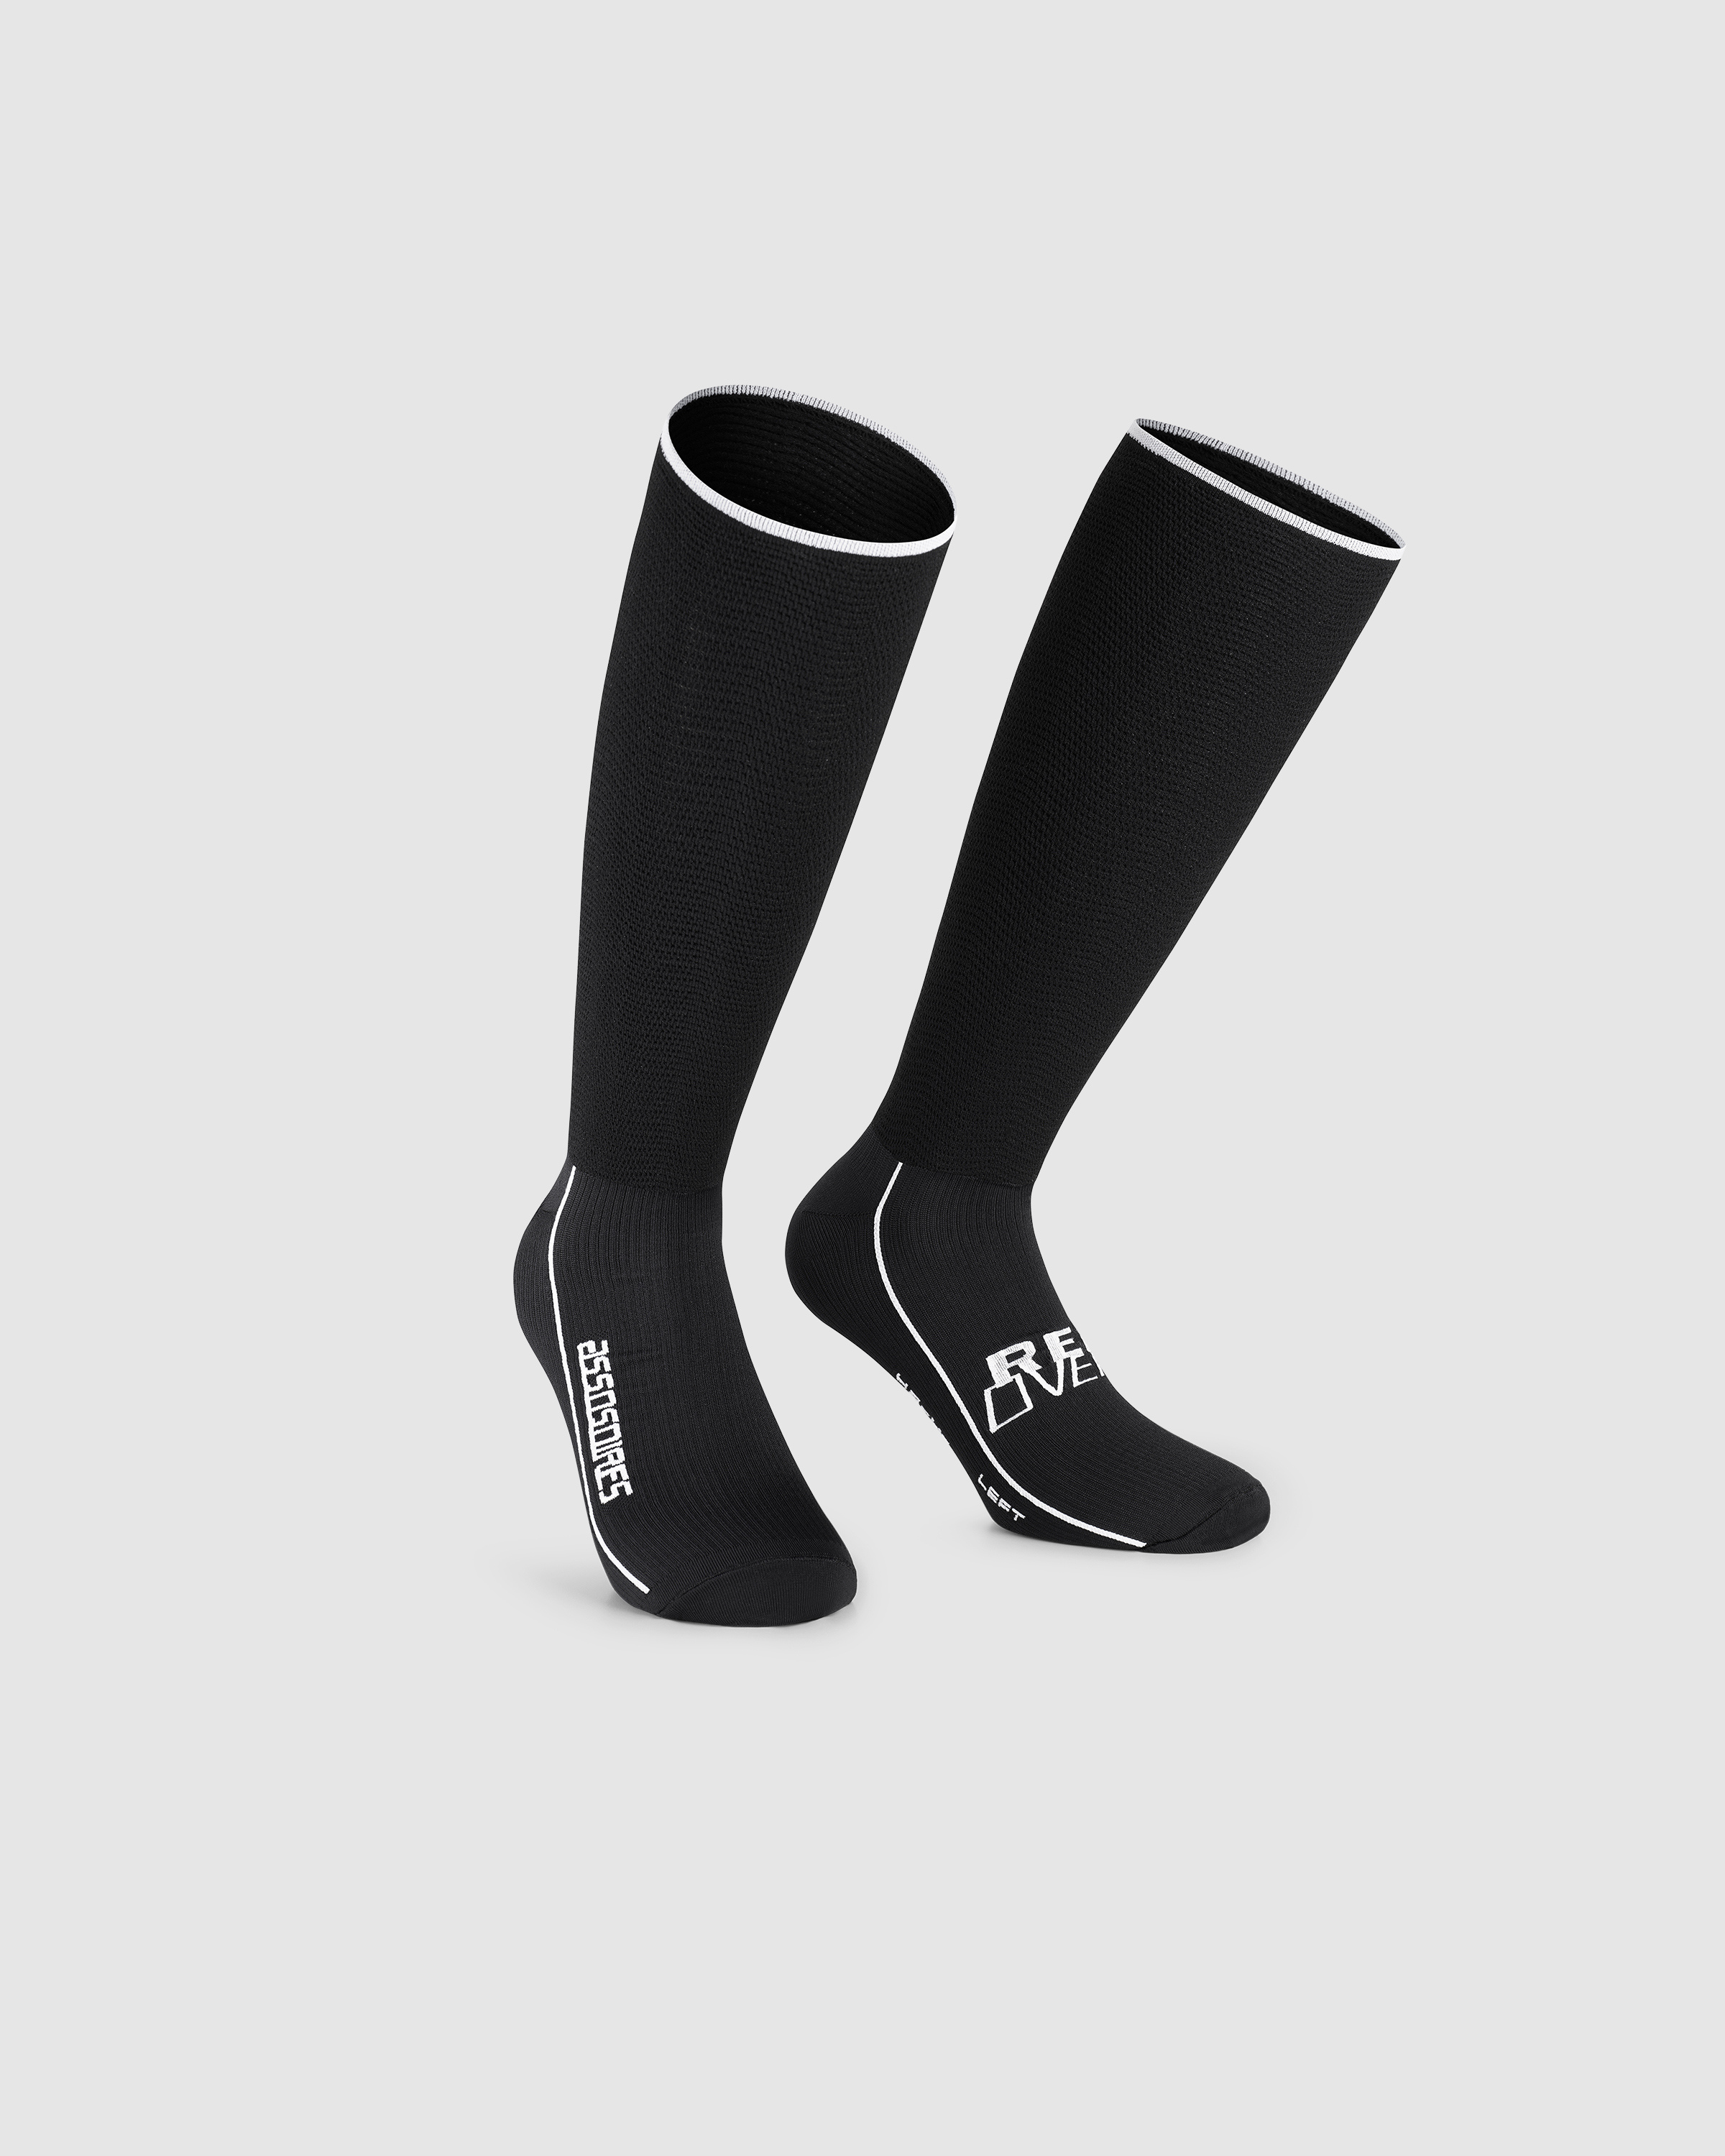 Winter Socks EVO, blackSeries » ASSOS Of Switzerland